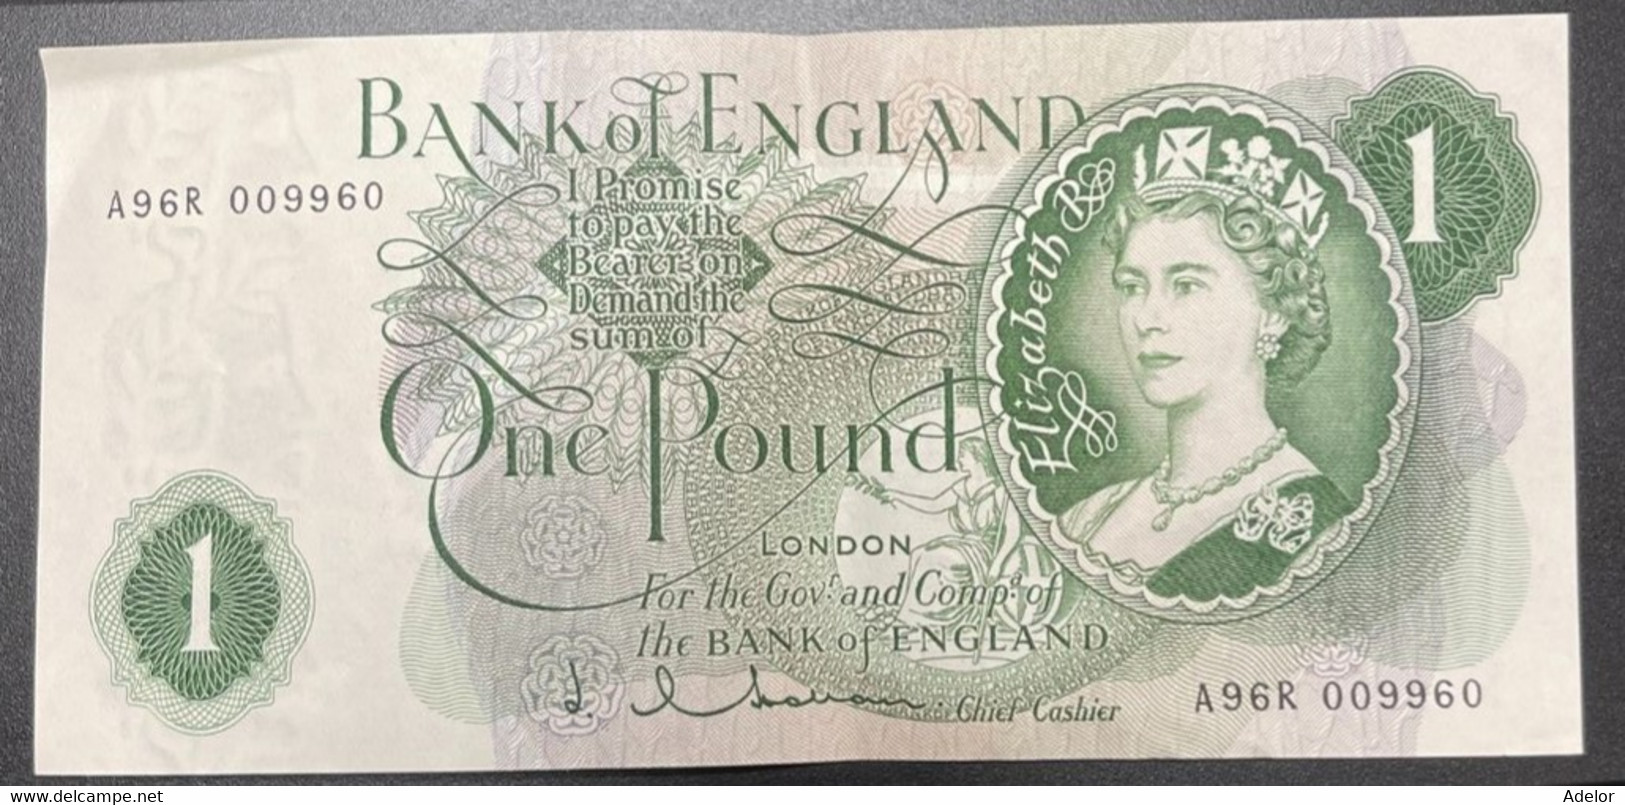 Beau Billet D'Angleterre De 1 Pound ND 1960/1978. TTB/SUP - 1 Pound